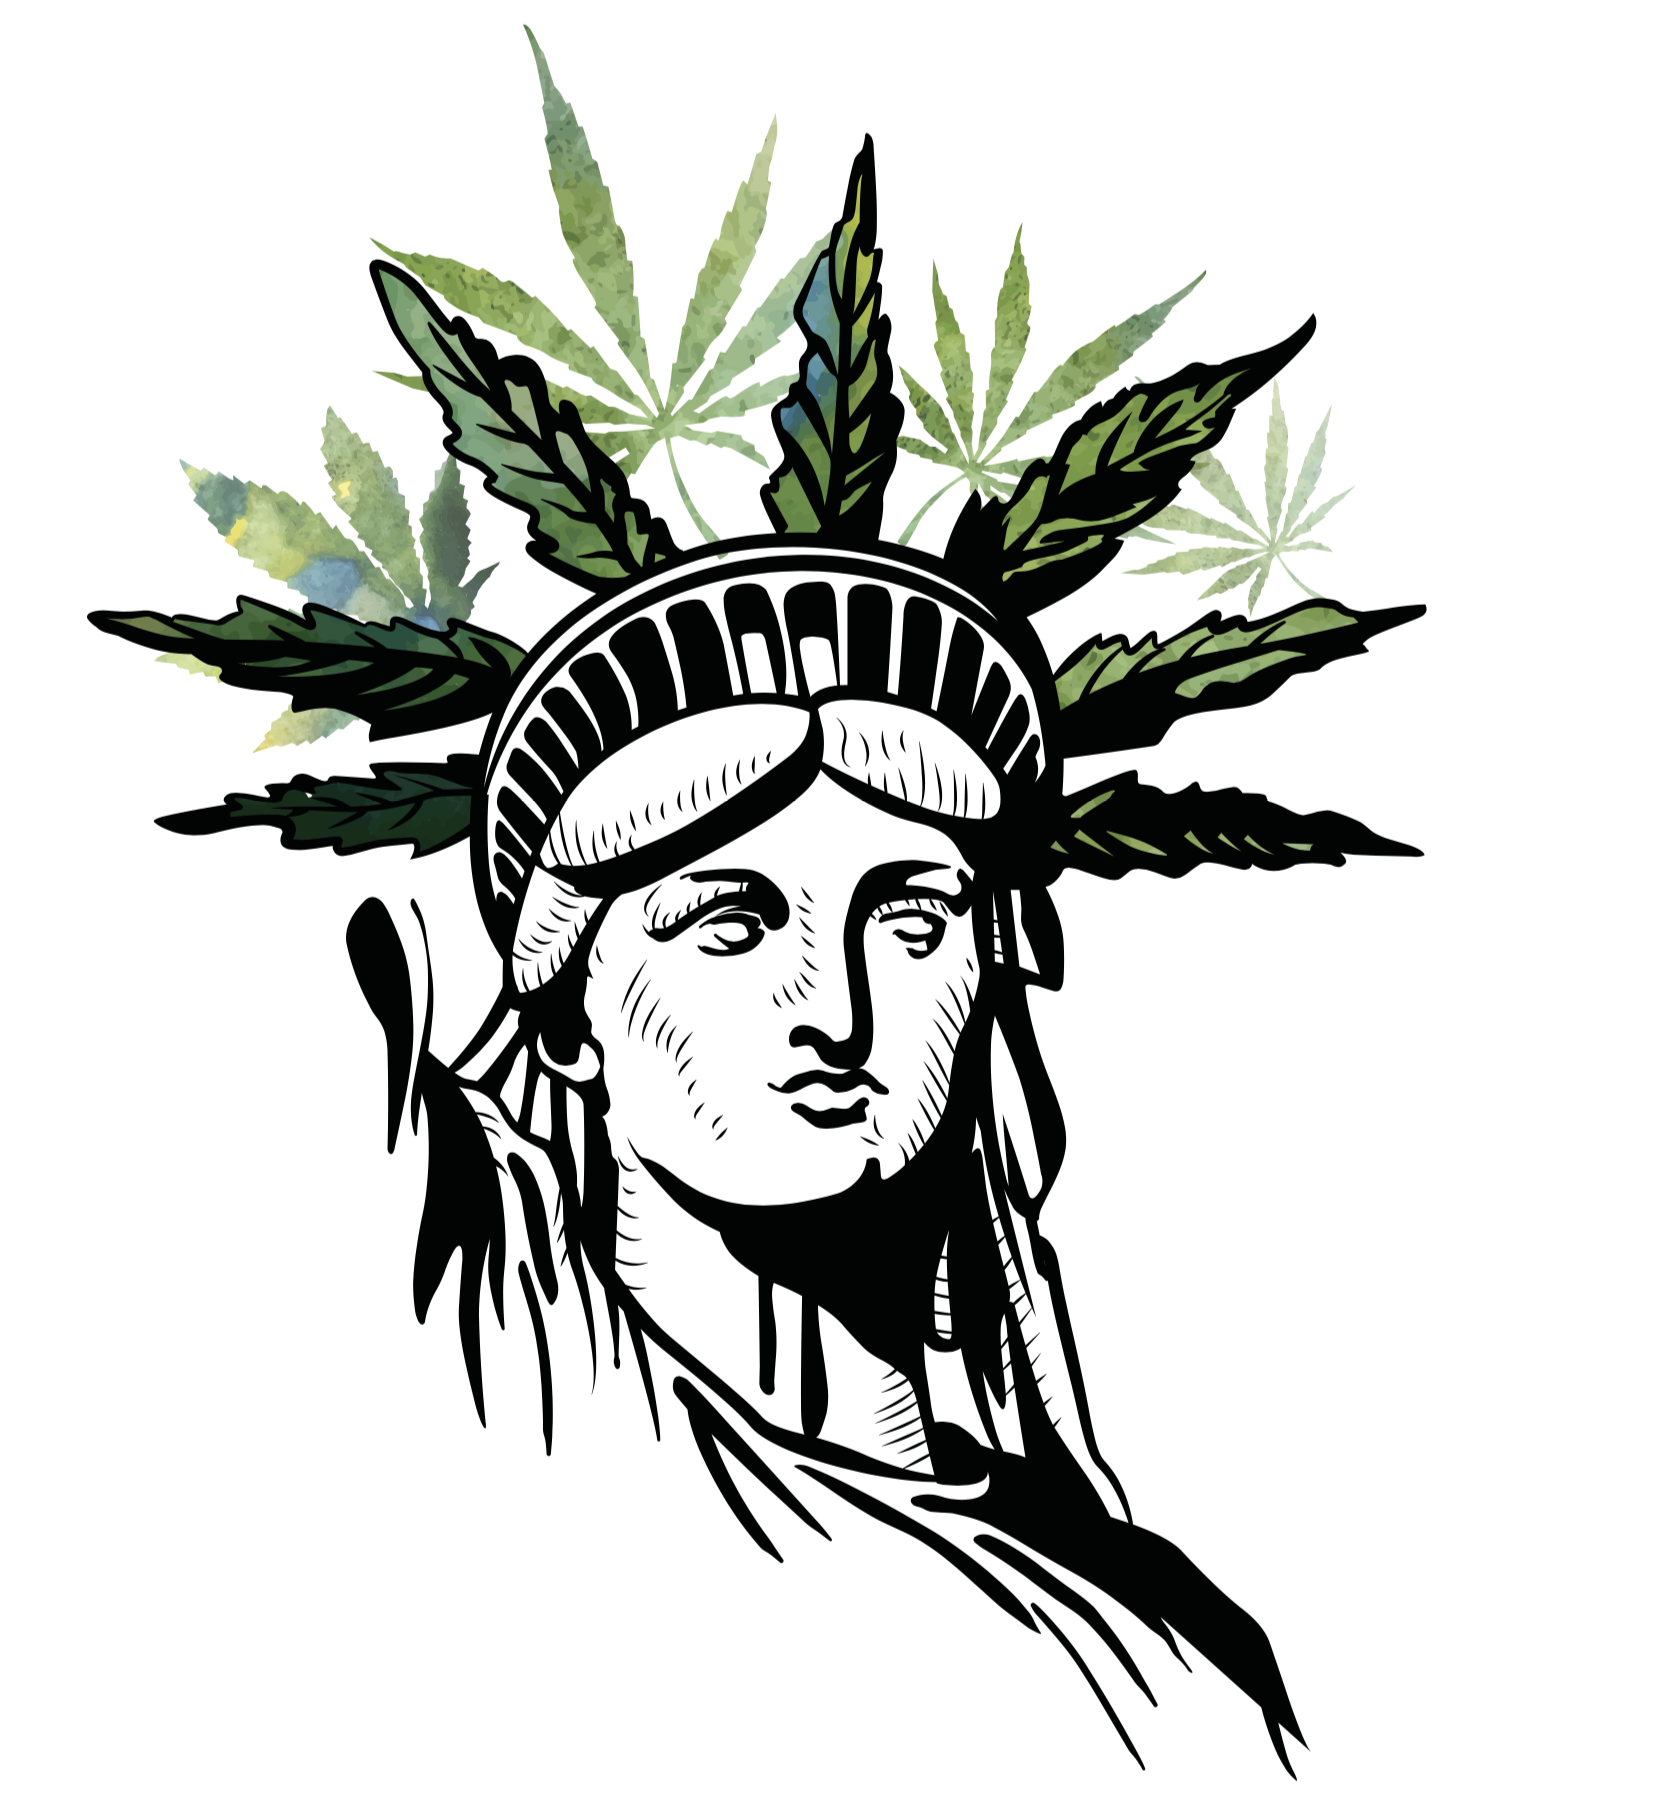 Cannabis Among Top Priorities for New York Legislators in 2020.